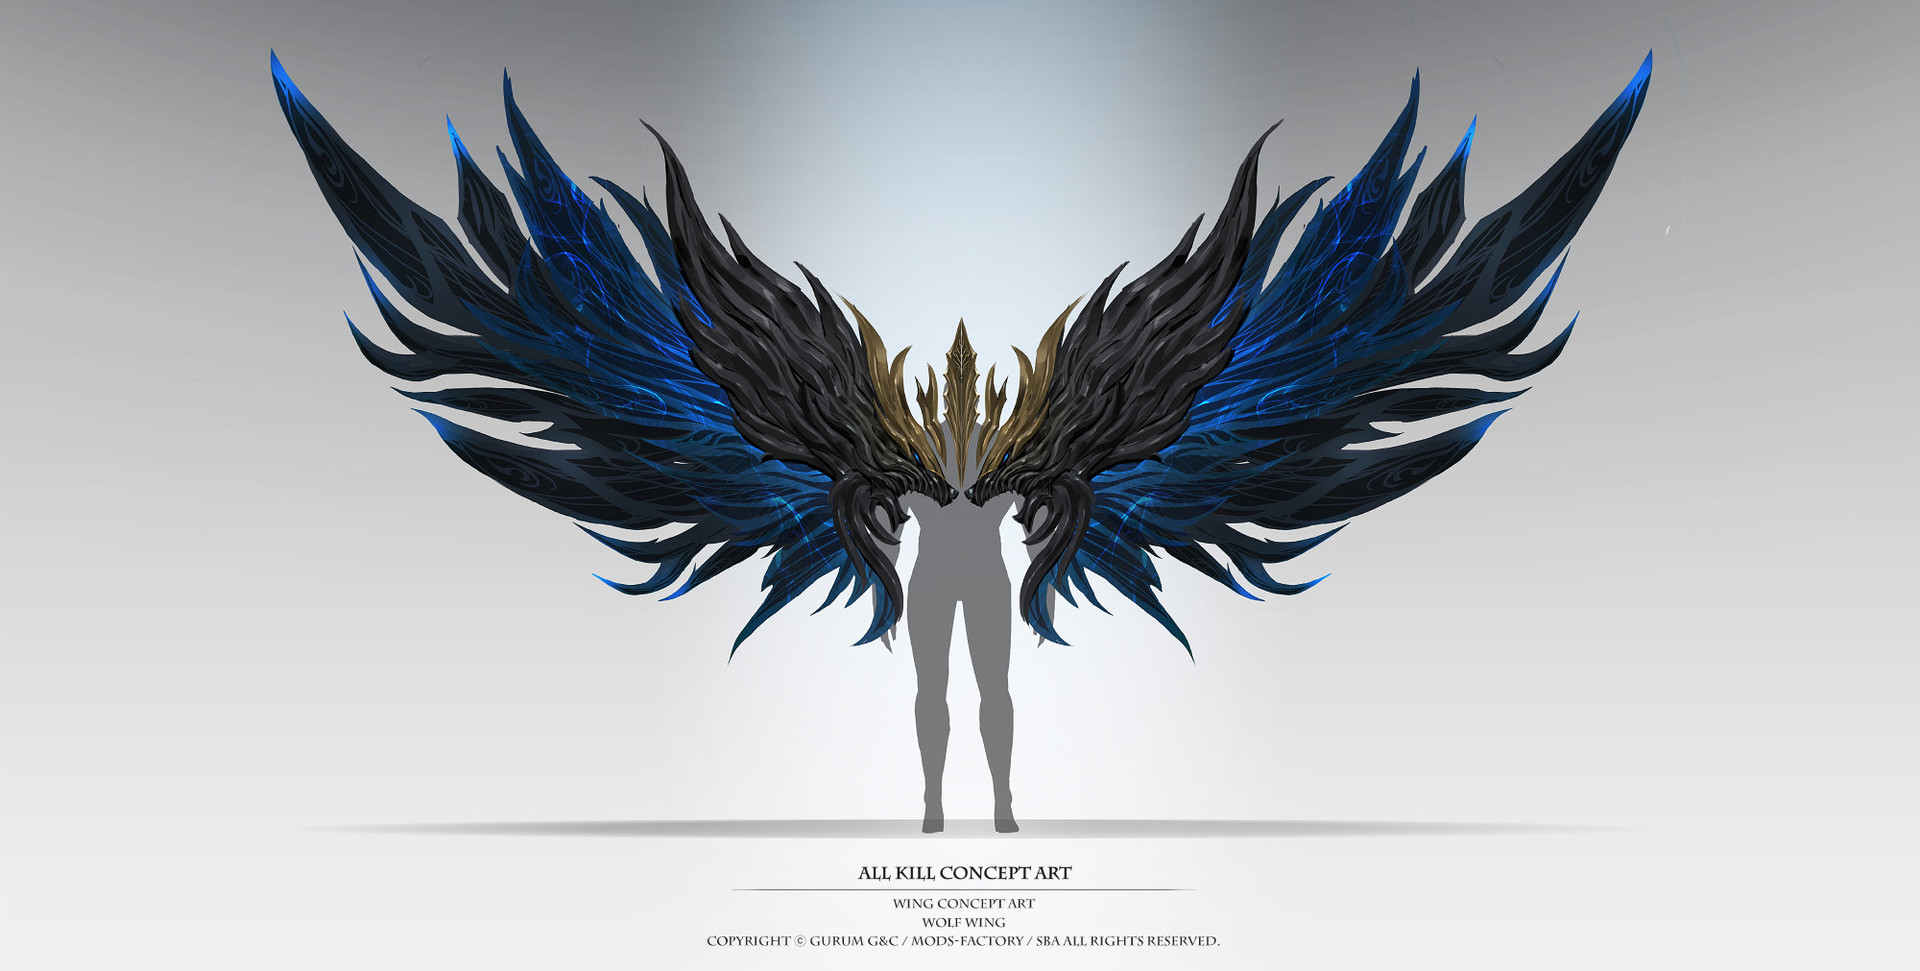 25 С крыльями. Голубые Крылья арт. Легендарные крылья